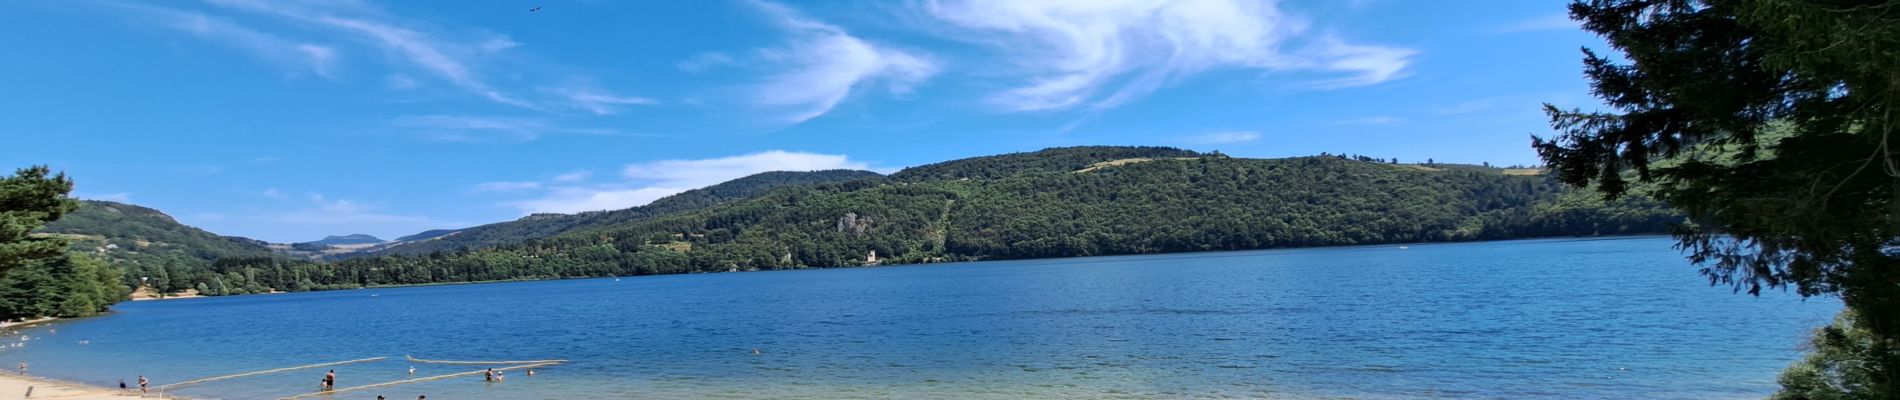 Excursión Senderismo Le Lac-d'Issarlès - Grand tour lac d'Issarlès - Photo